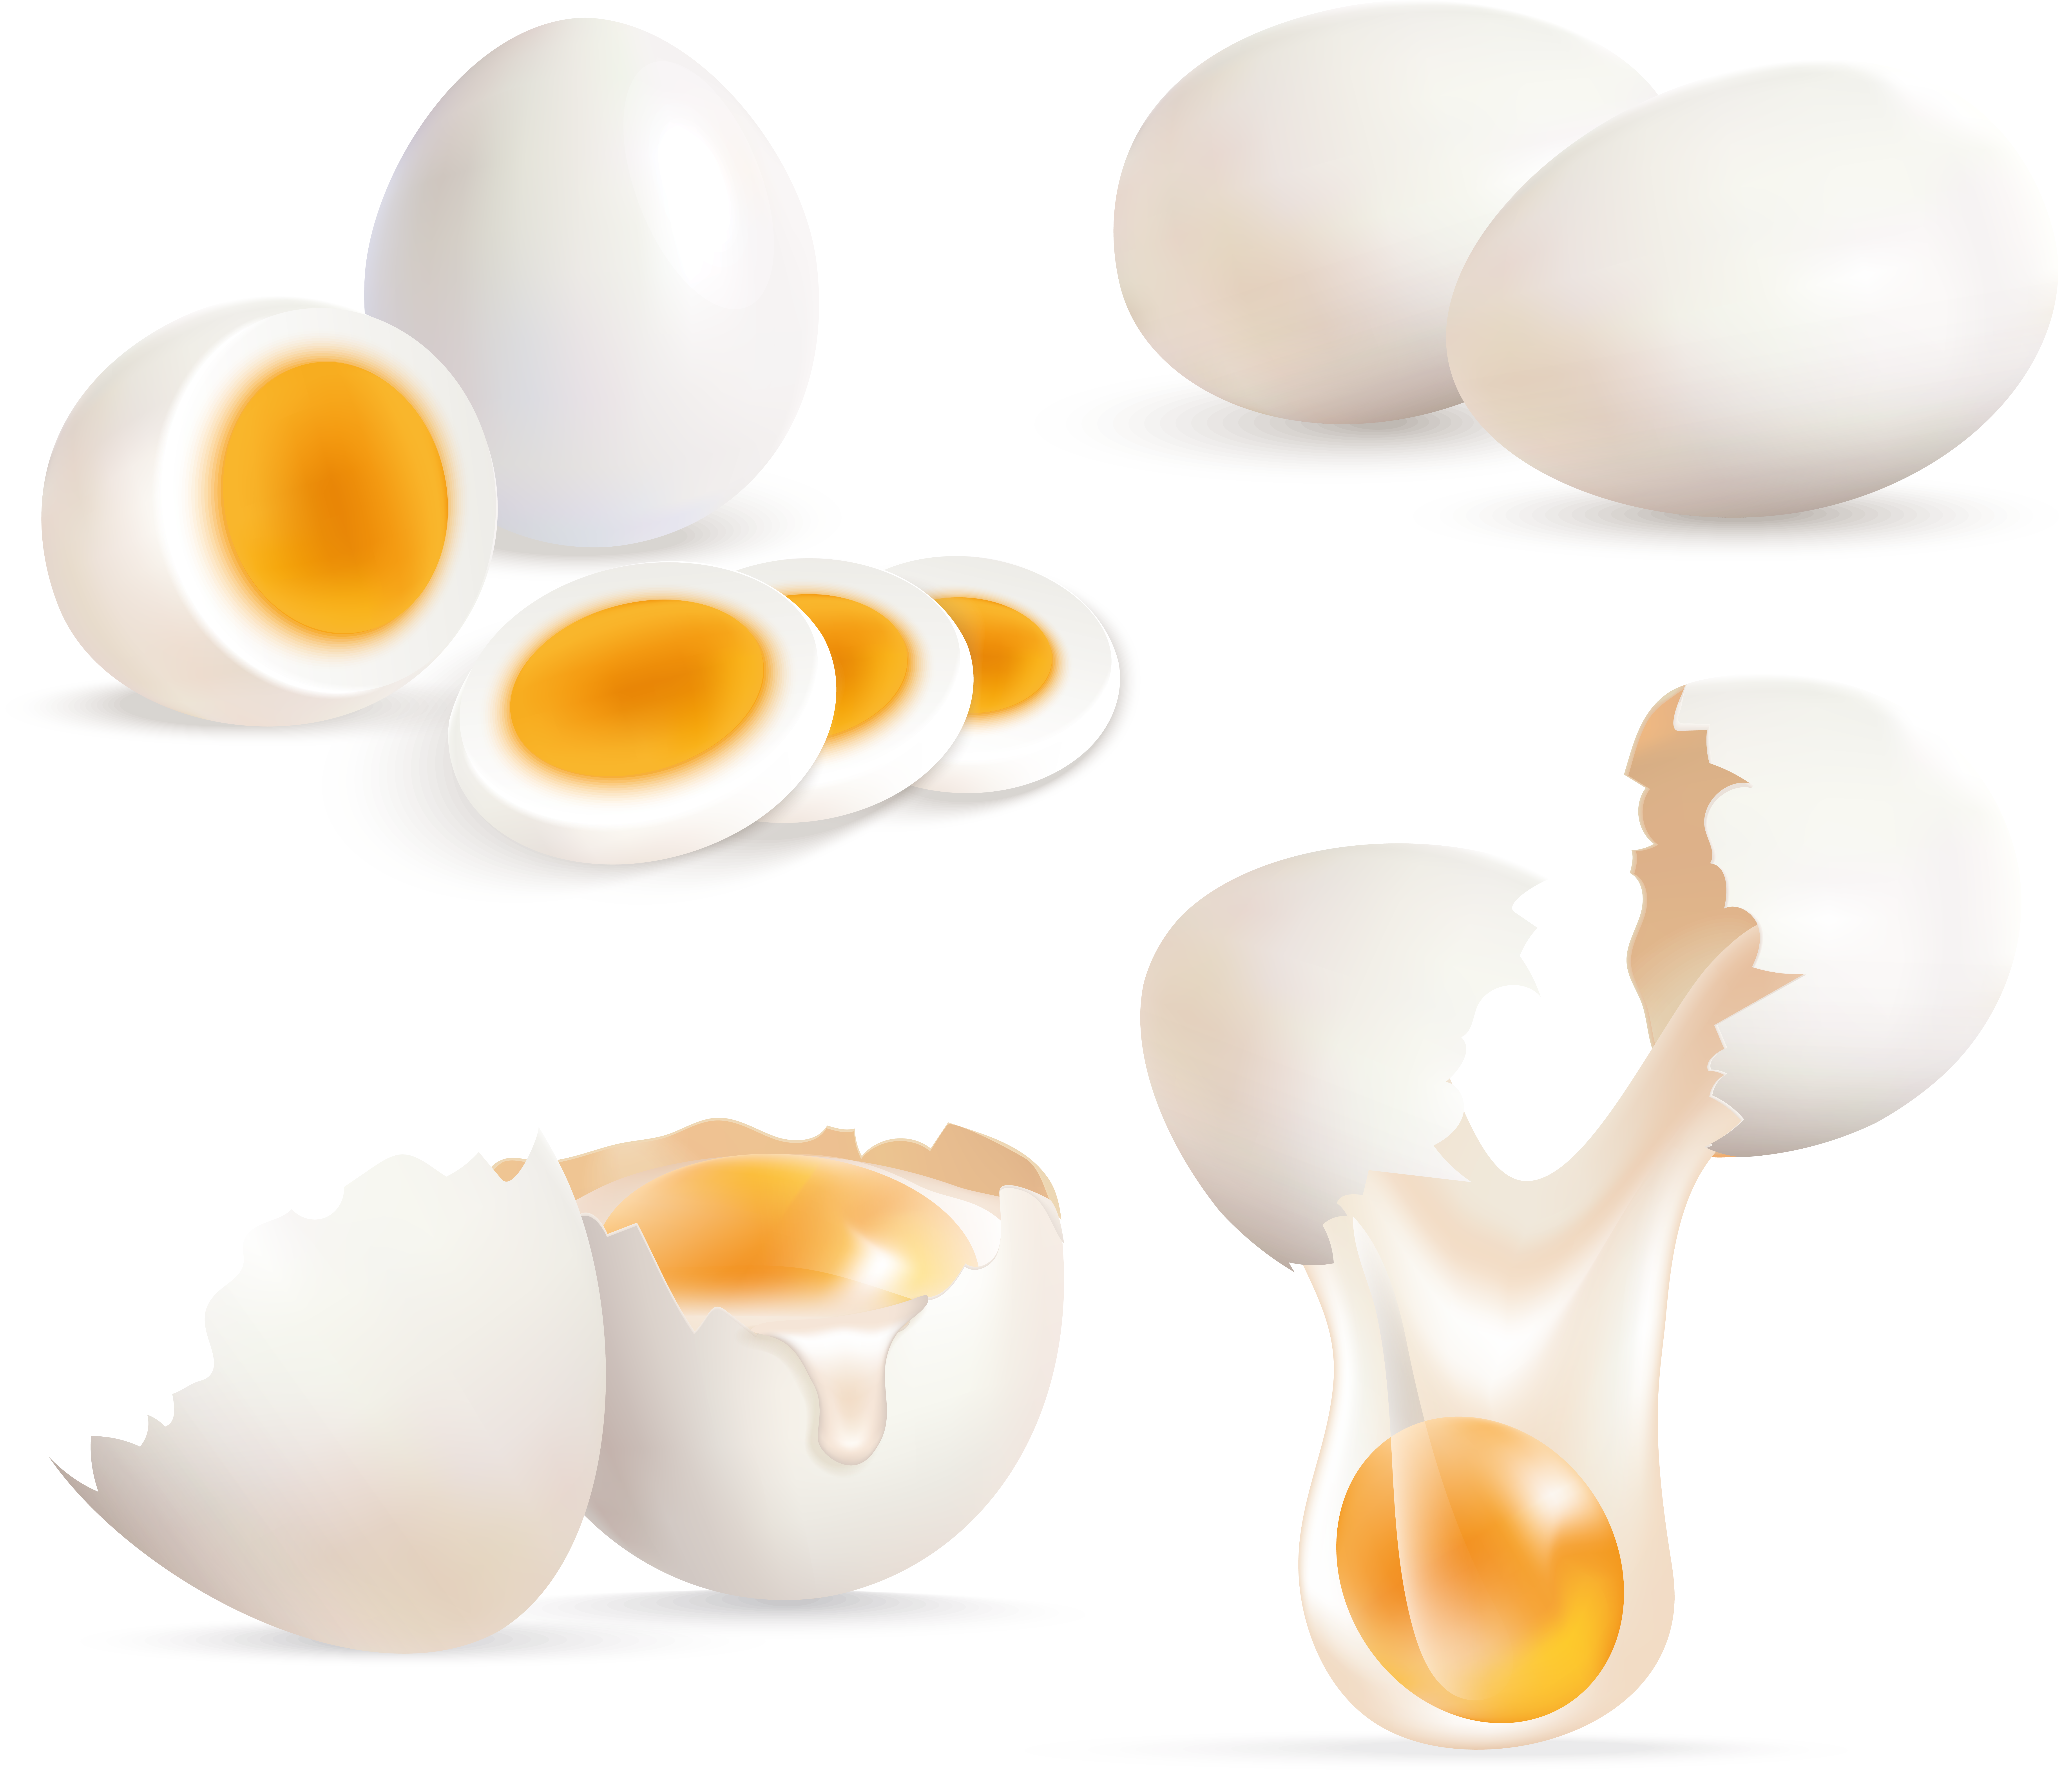 Kırık yumurta, kesilmiş yumurta